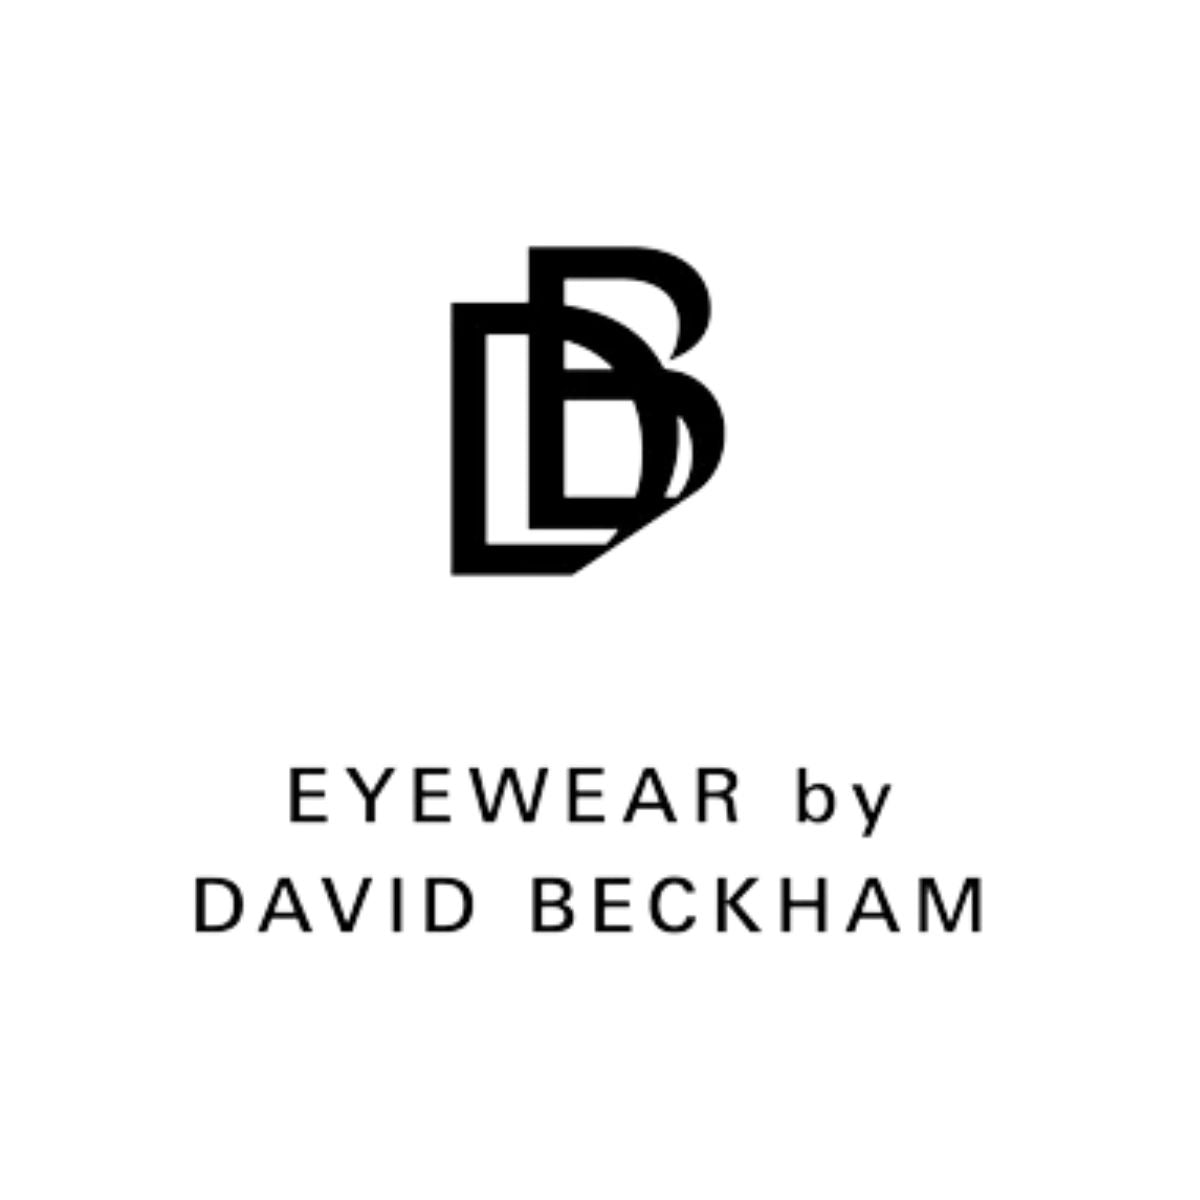 "David Beckham Premium eyewear brands sunglasses & optical frames and lenses at optorium"